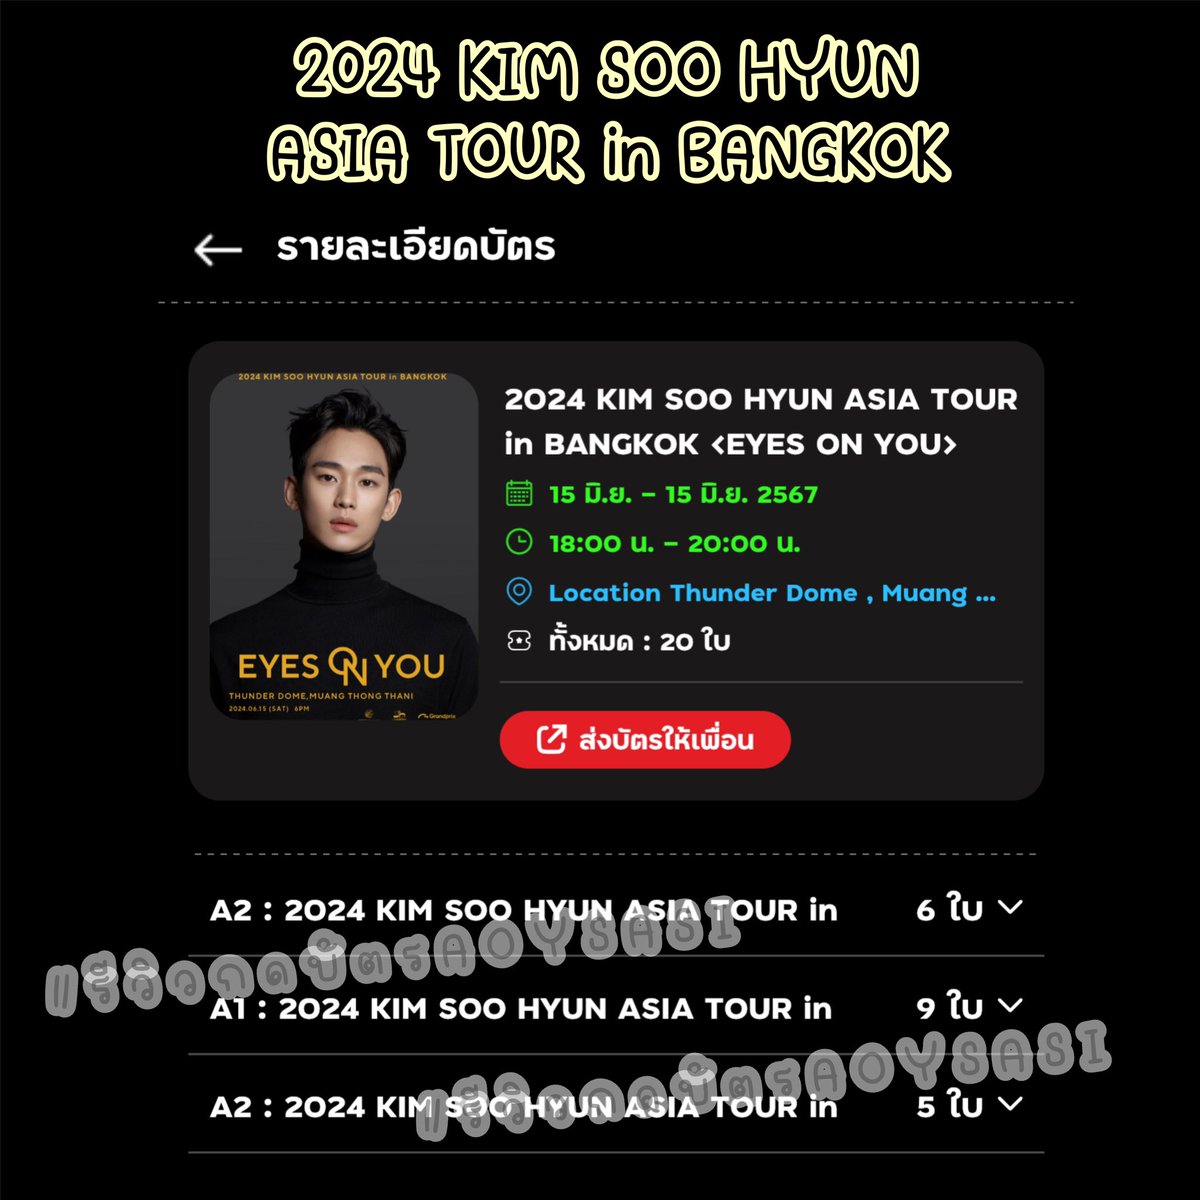 2024 KIM SOO HYUN ASIA TOUR in BANGKOK

~ 20 ใบ ได้มาครบทุกคน 

ทุกคนได้โซน Diamond (6500) หมดทุกคนค่ะ 🙏🏻🙇🏻‍♀️💖 

#รีวิวกดบัตรAoysasi #คิมซูฮยอน 
#KIMSOOHYUN #EYESONYOU #2024KIMSOOHYUNASIATOURINBANGKOK #GOLDMEDALIST #JHARMONY #GRANDPRIX #GRANDPRIXXPECTRUM